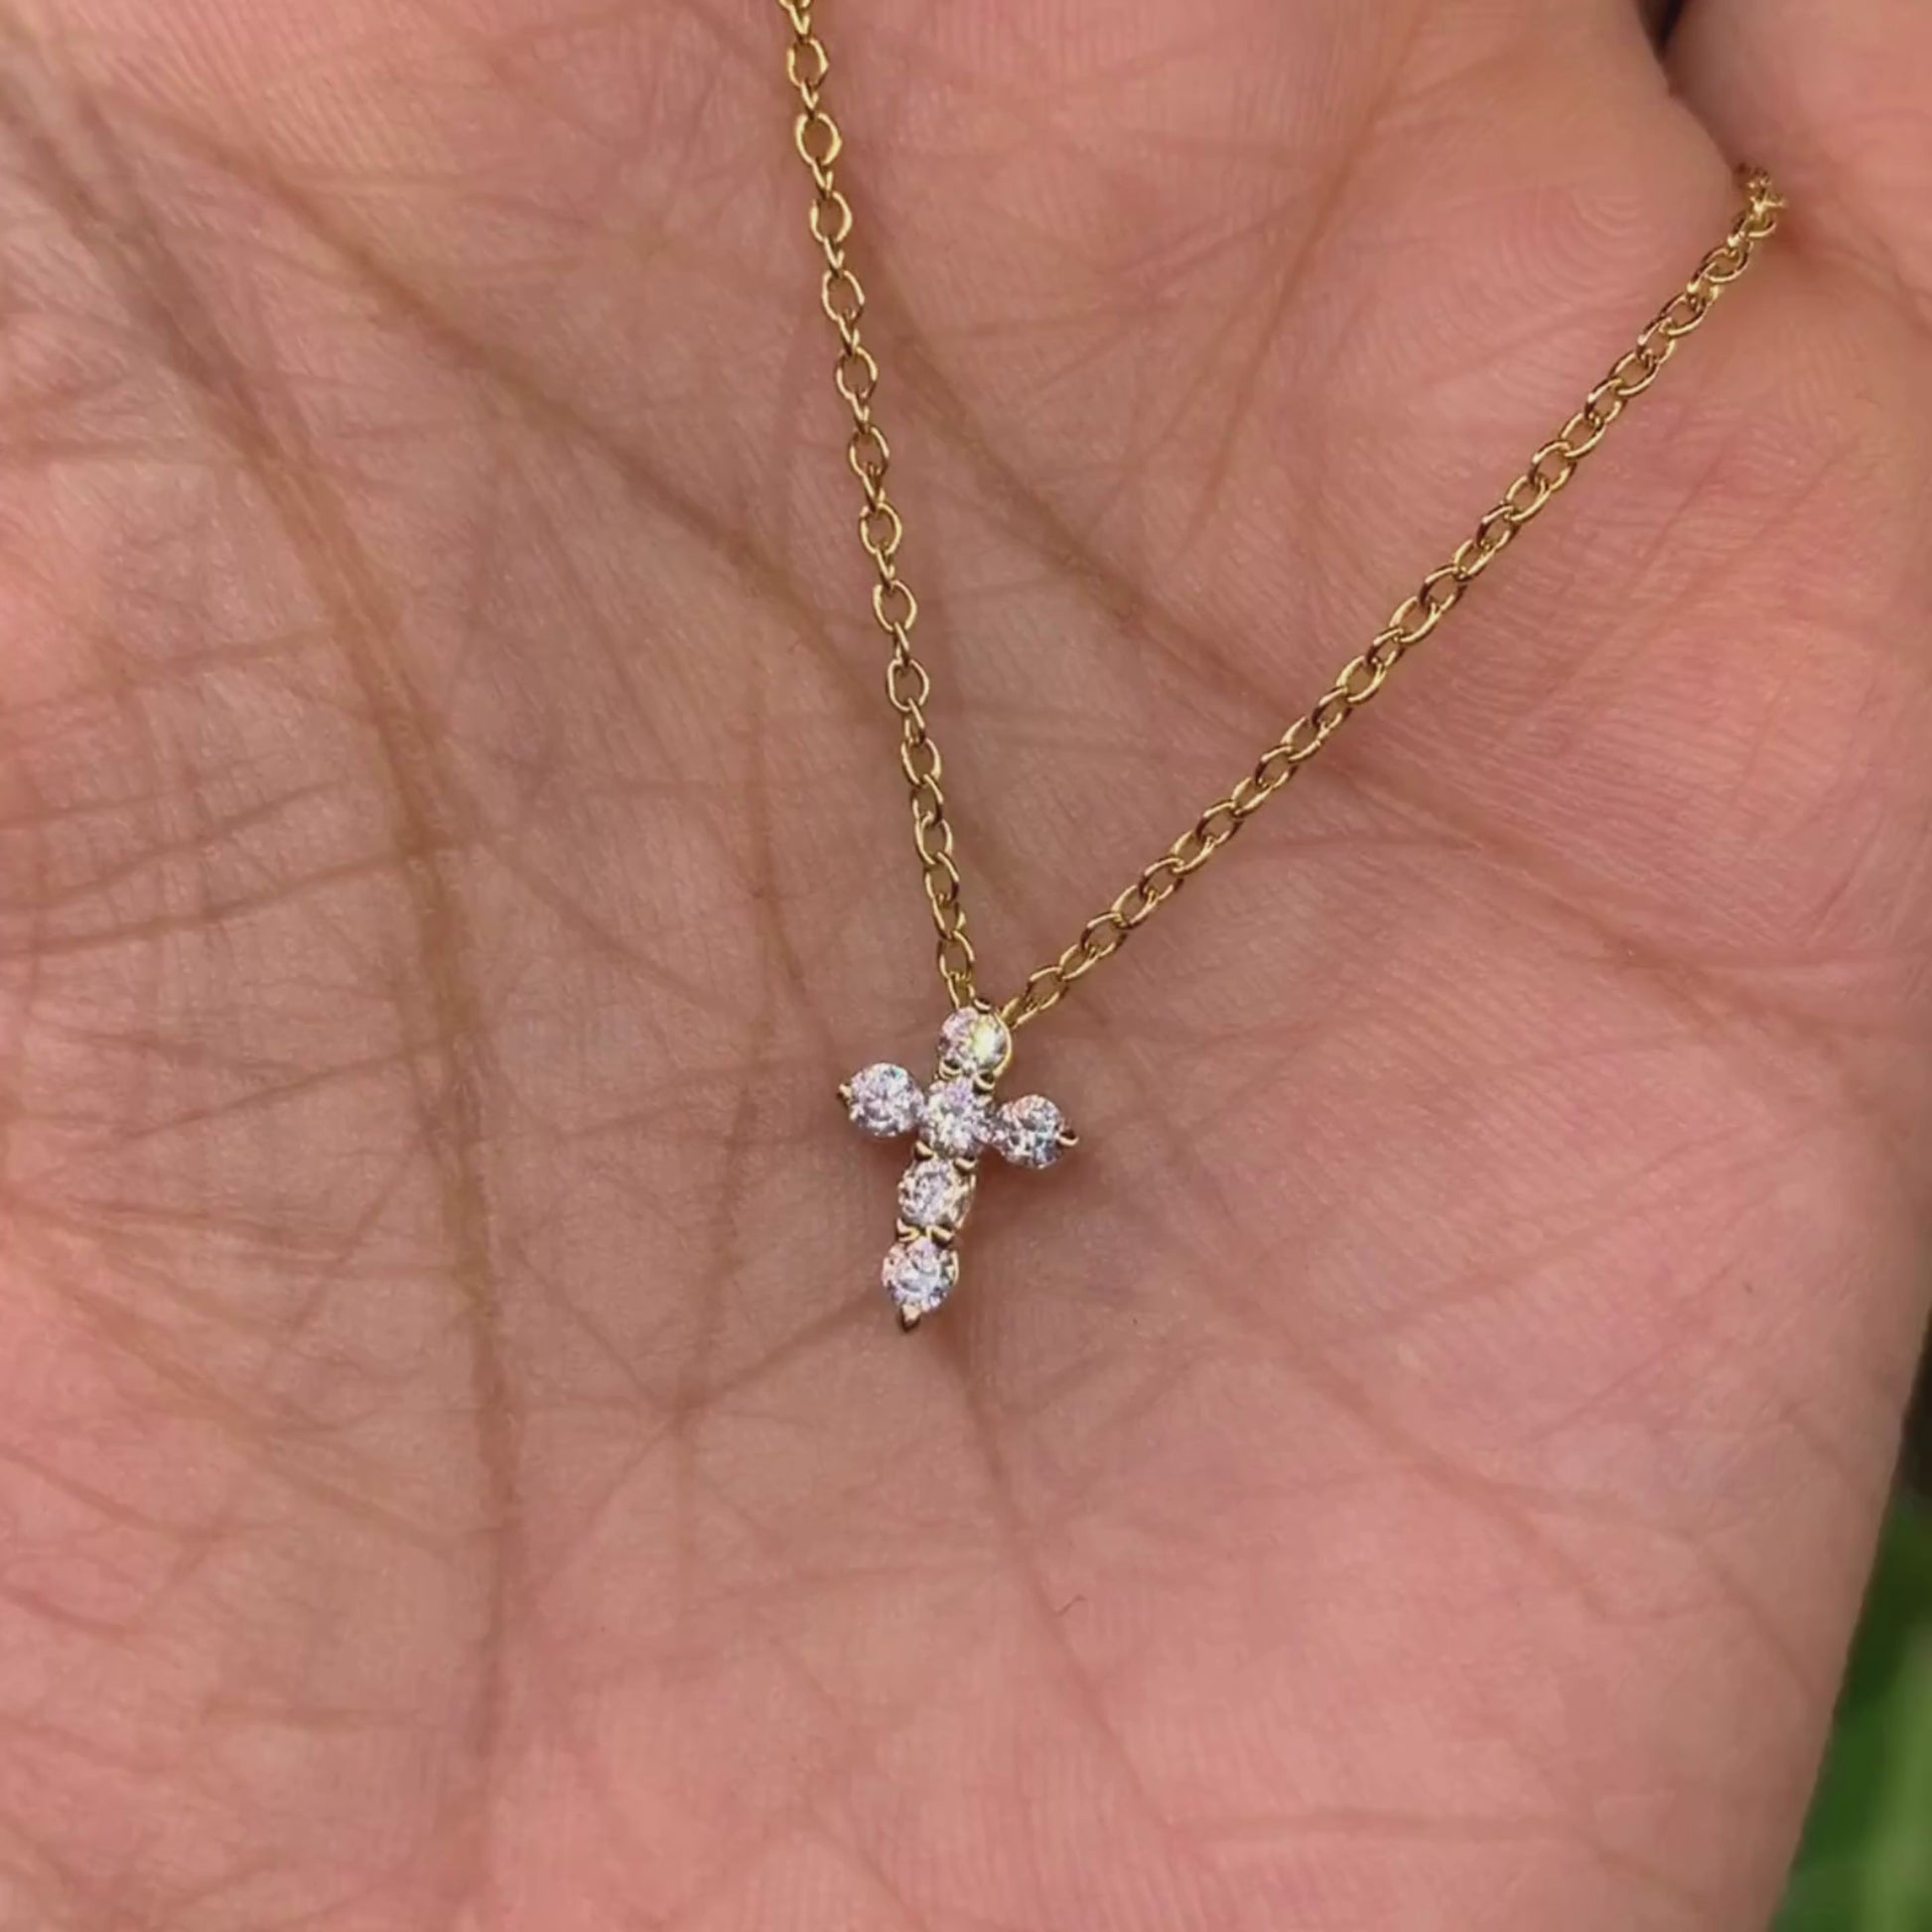 Cross pendant in 18k gold with diamonds